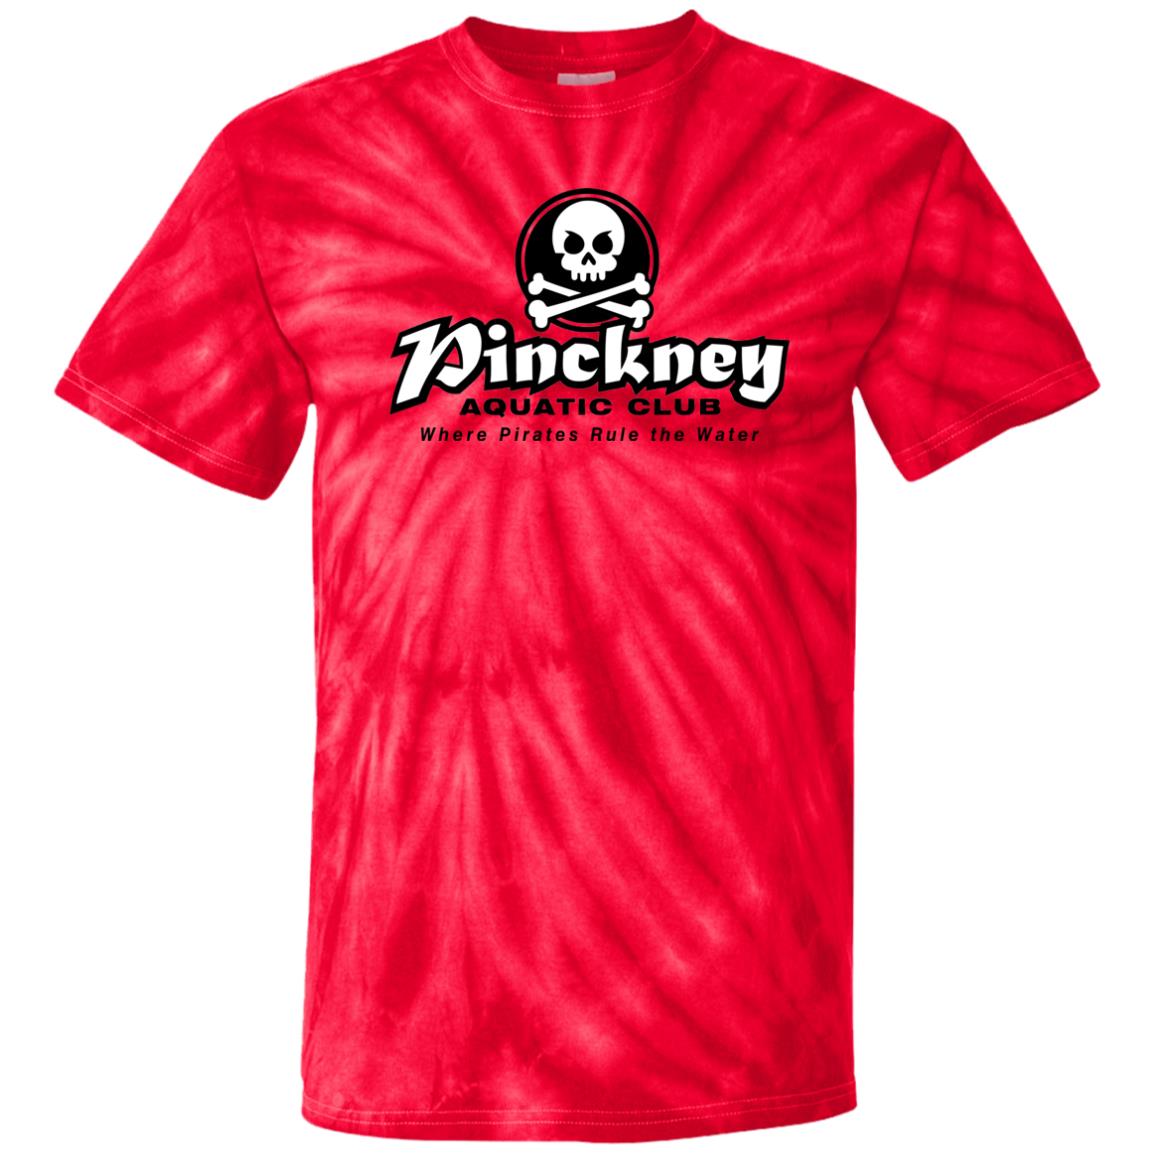 Pinckney Aquatic Club- B & W, CD100 100% Cotton Tie Dye T-Shirt